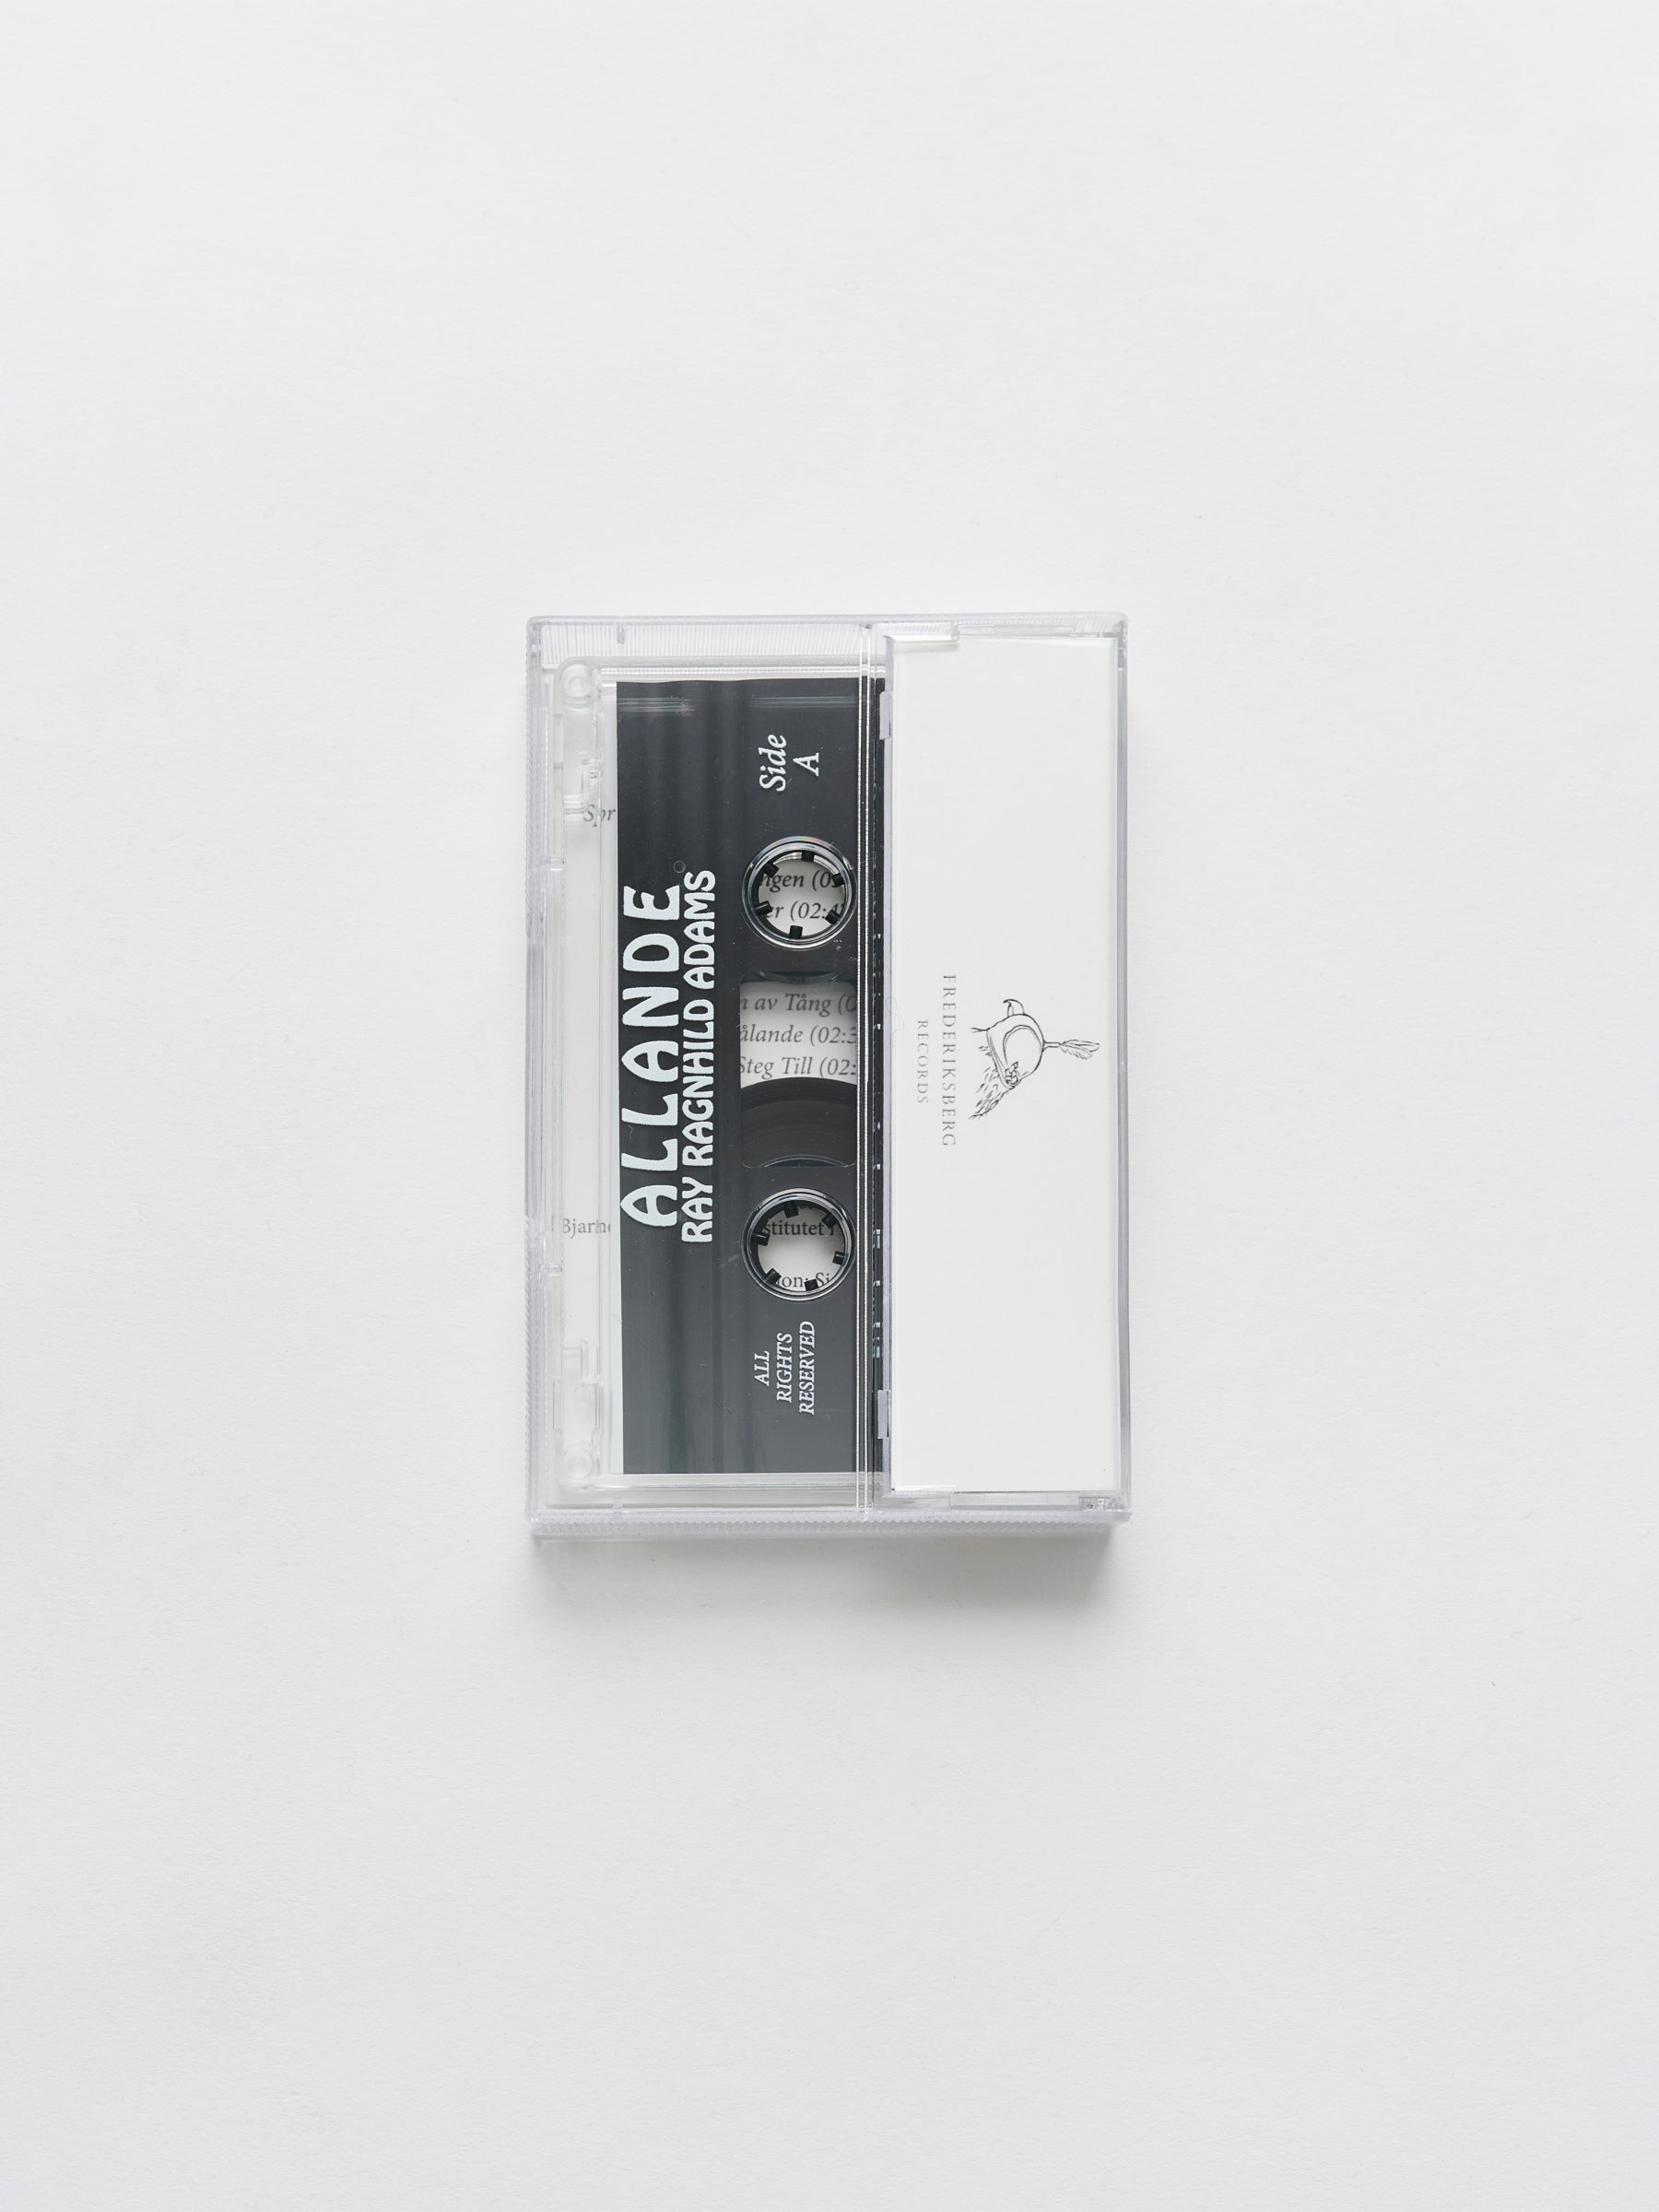 Allande Cassette by Ray Ragnhild Adams